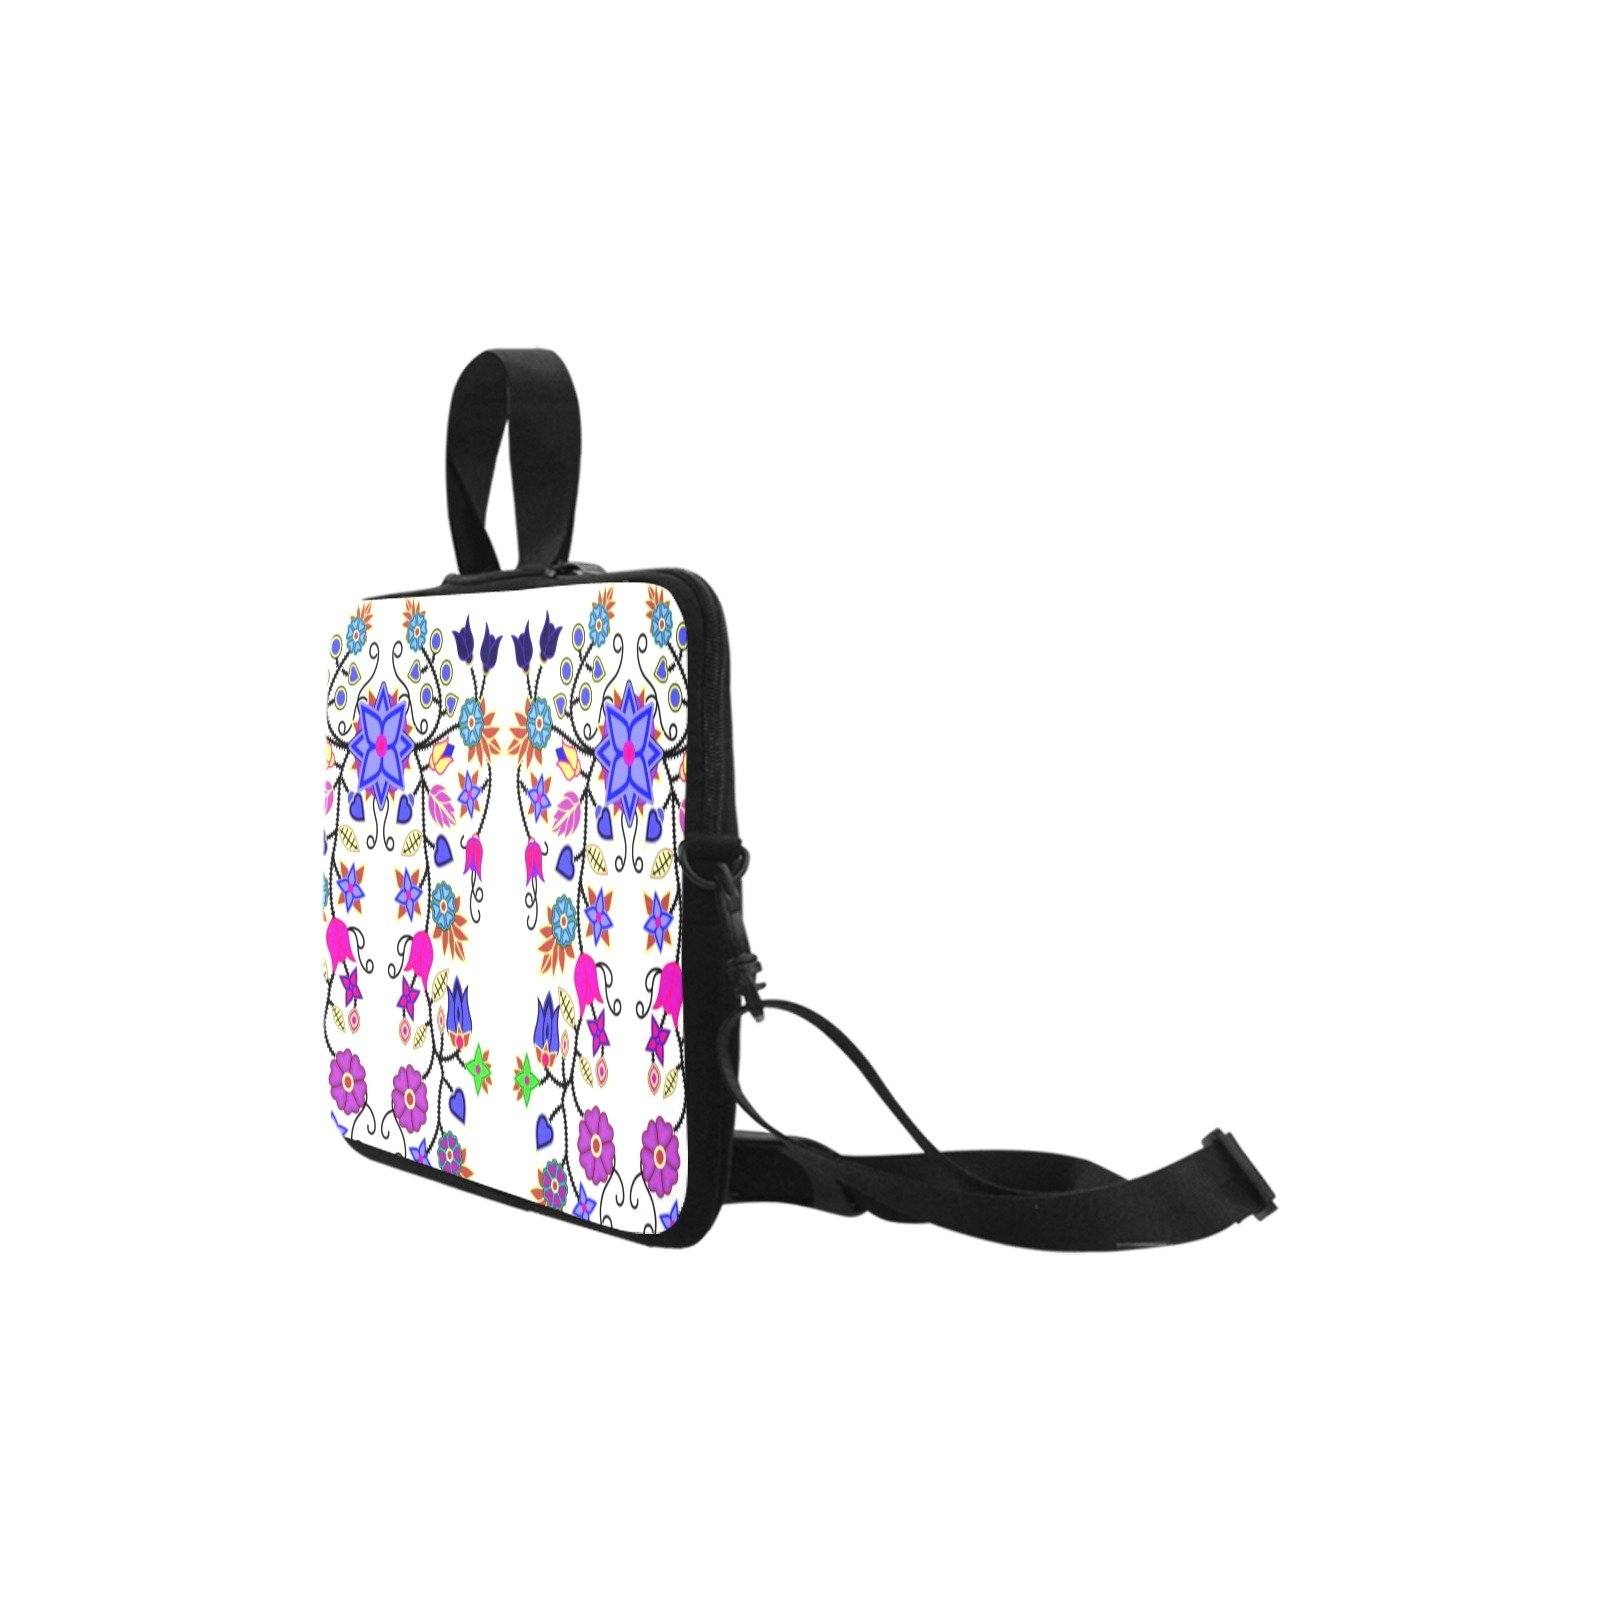 Floral Beadwork Seven Clans White Laptop Handbags 15" Laptop Handbags 15" e-joyer 